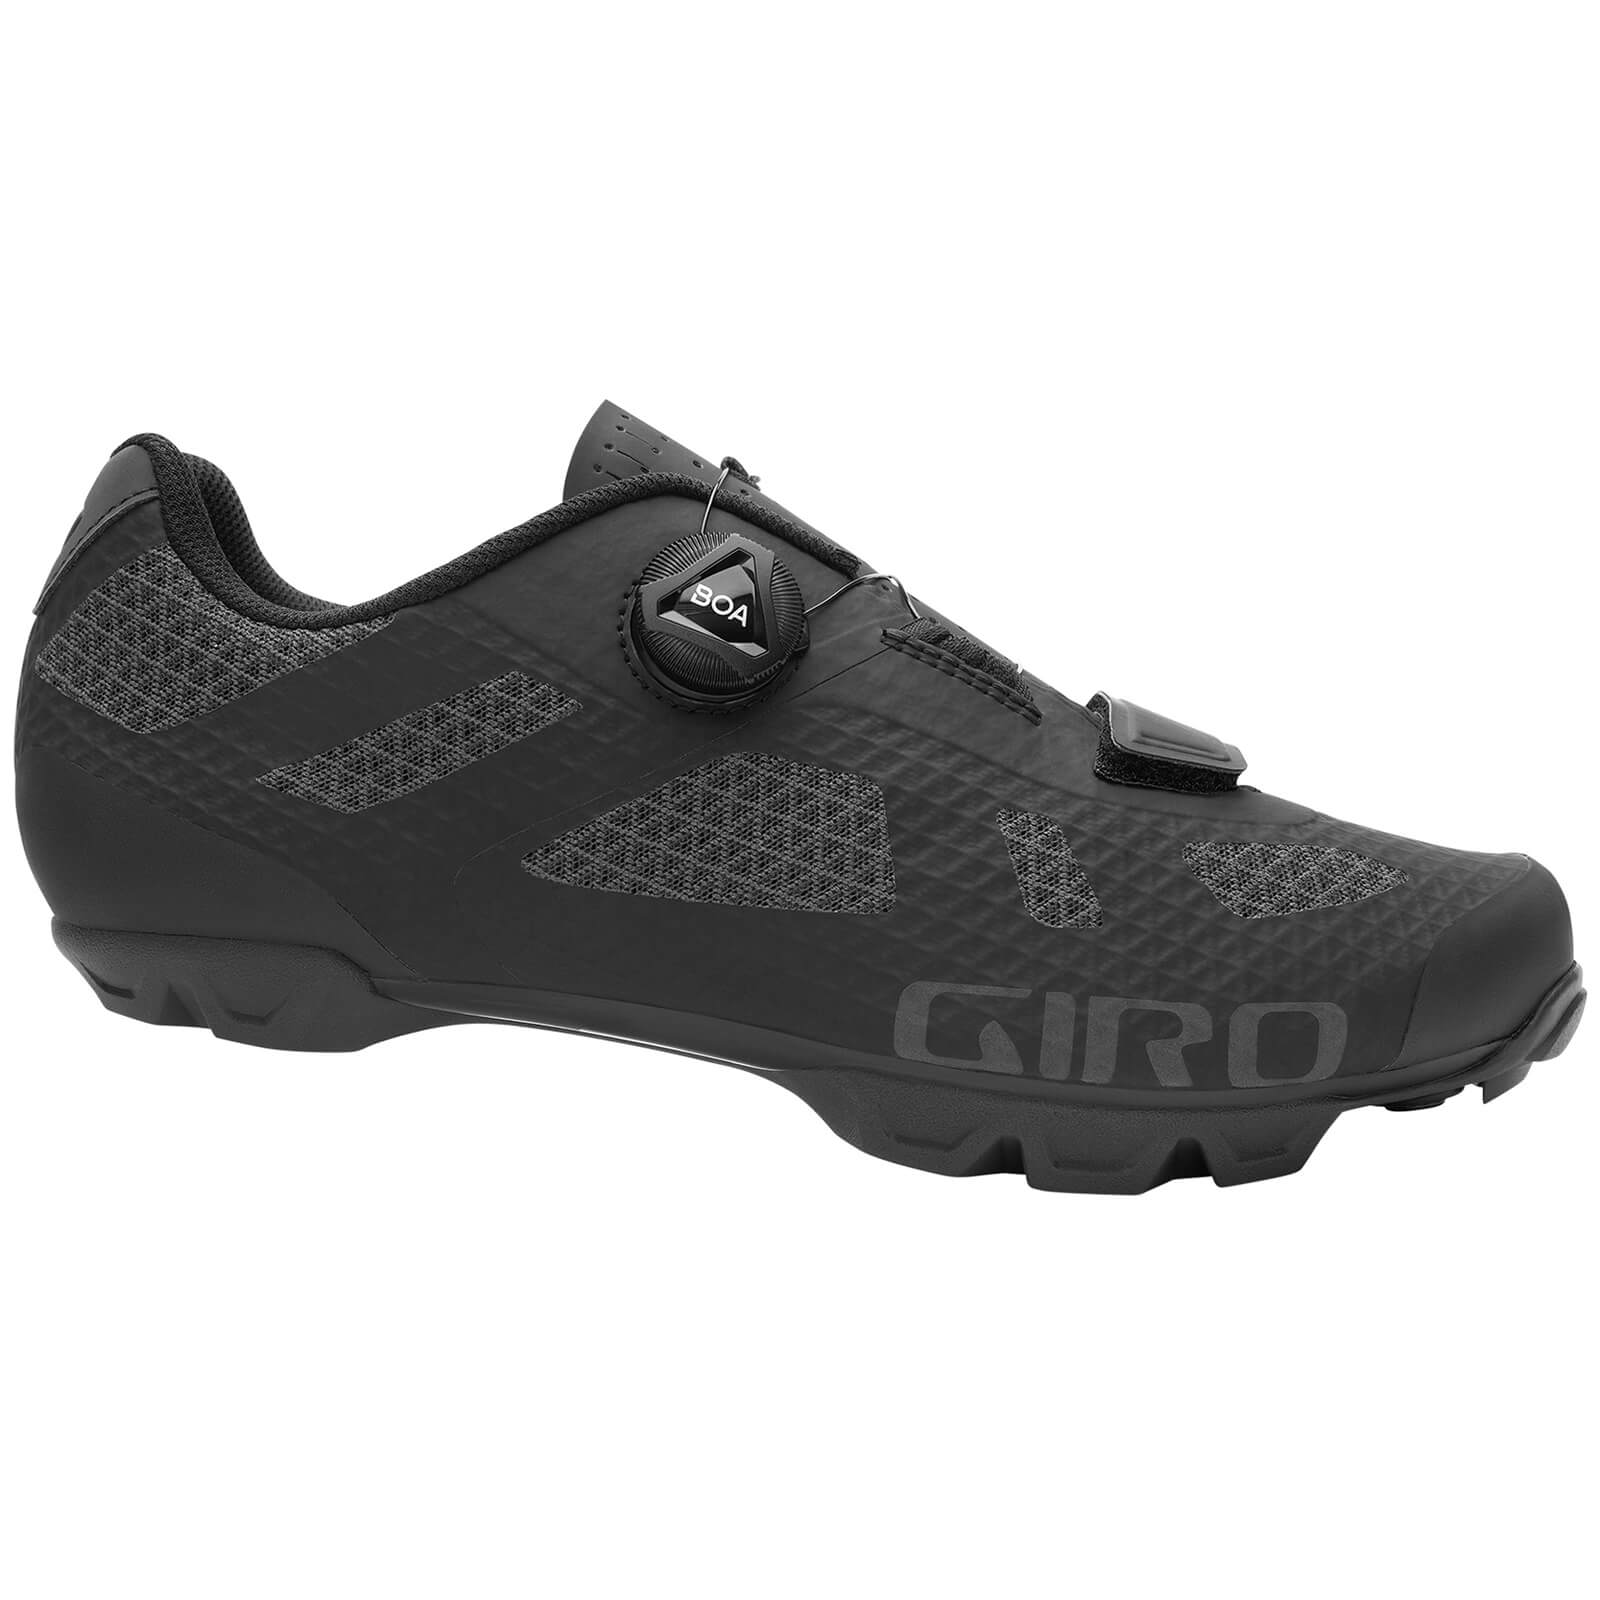 Giro Women's Rincon MTB Shoe - EU 42